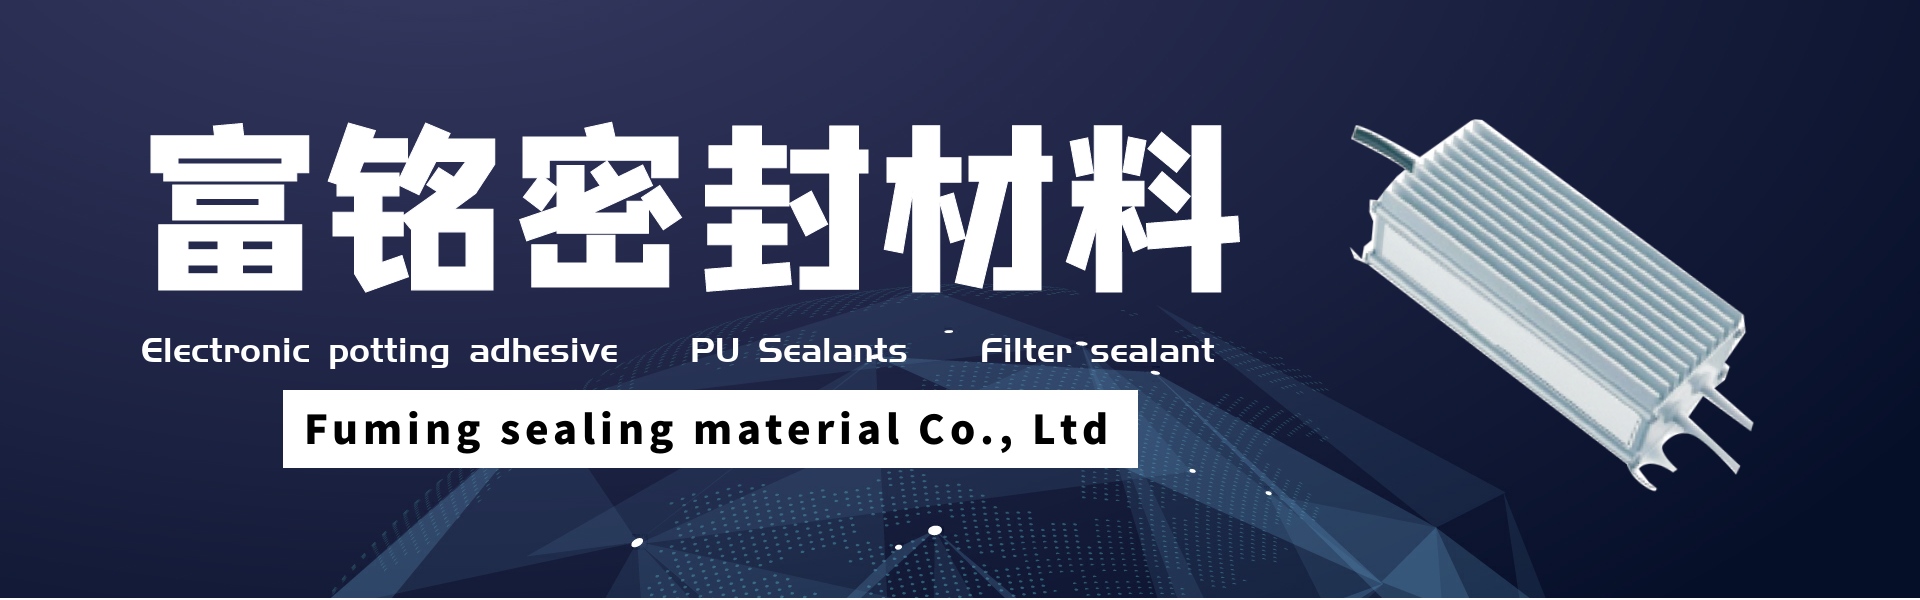 adhesivo para macetas electrónico, selladores de poliuretano, sellador de filtro,Dongguan fuming sealing material Co., Ltd